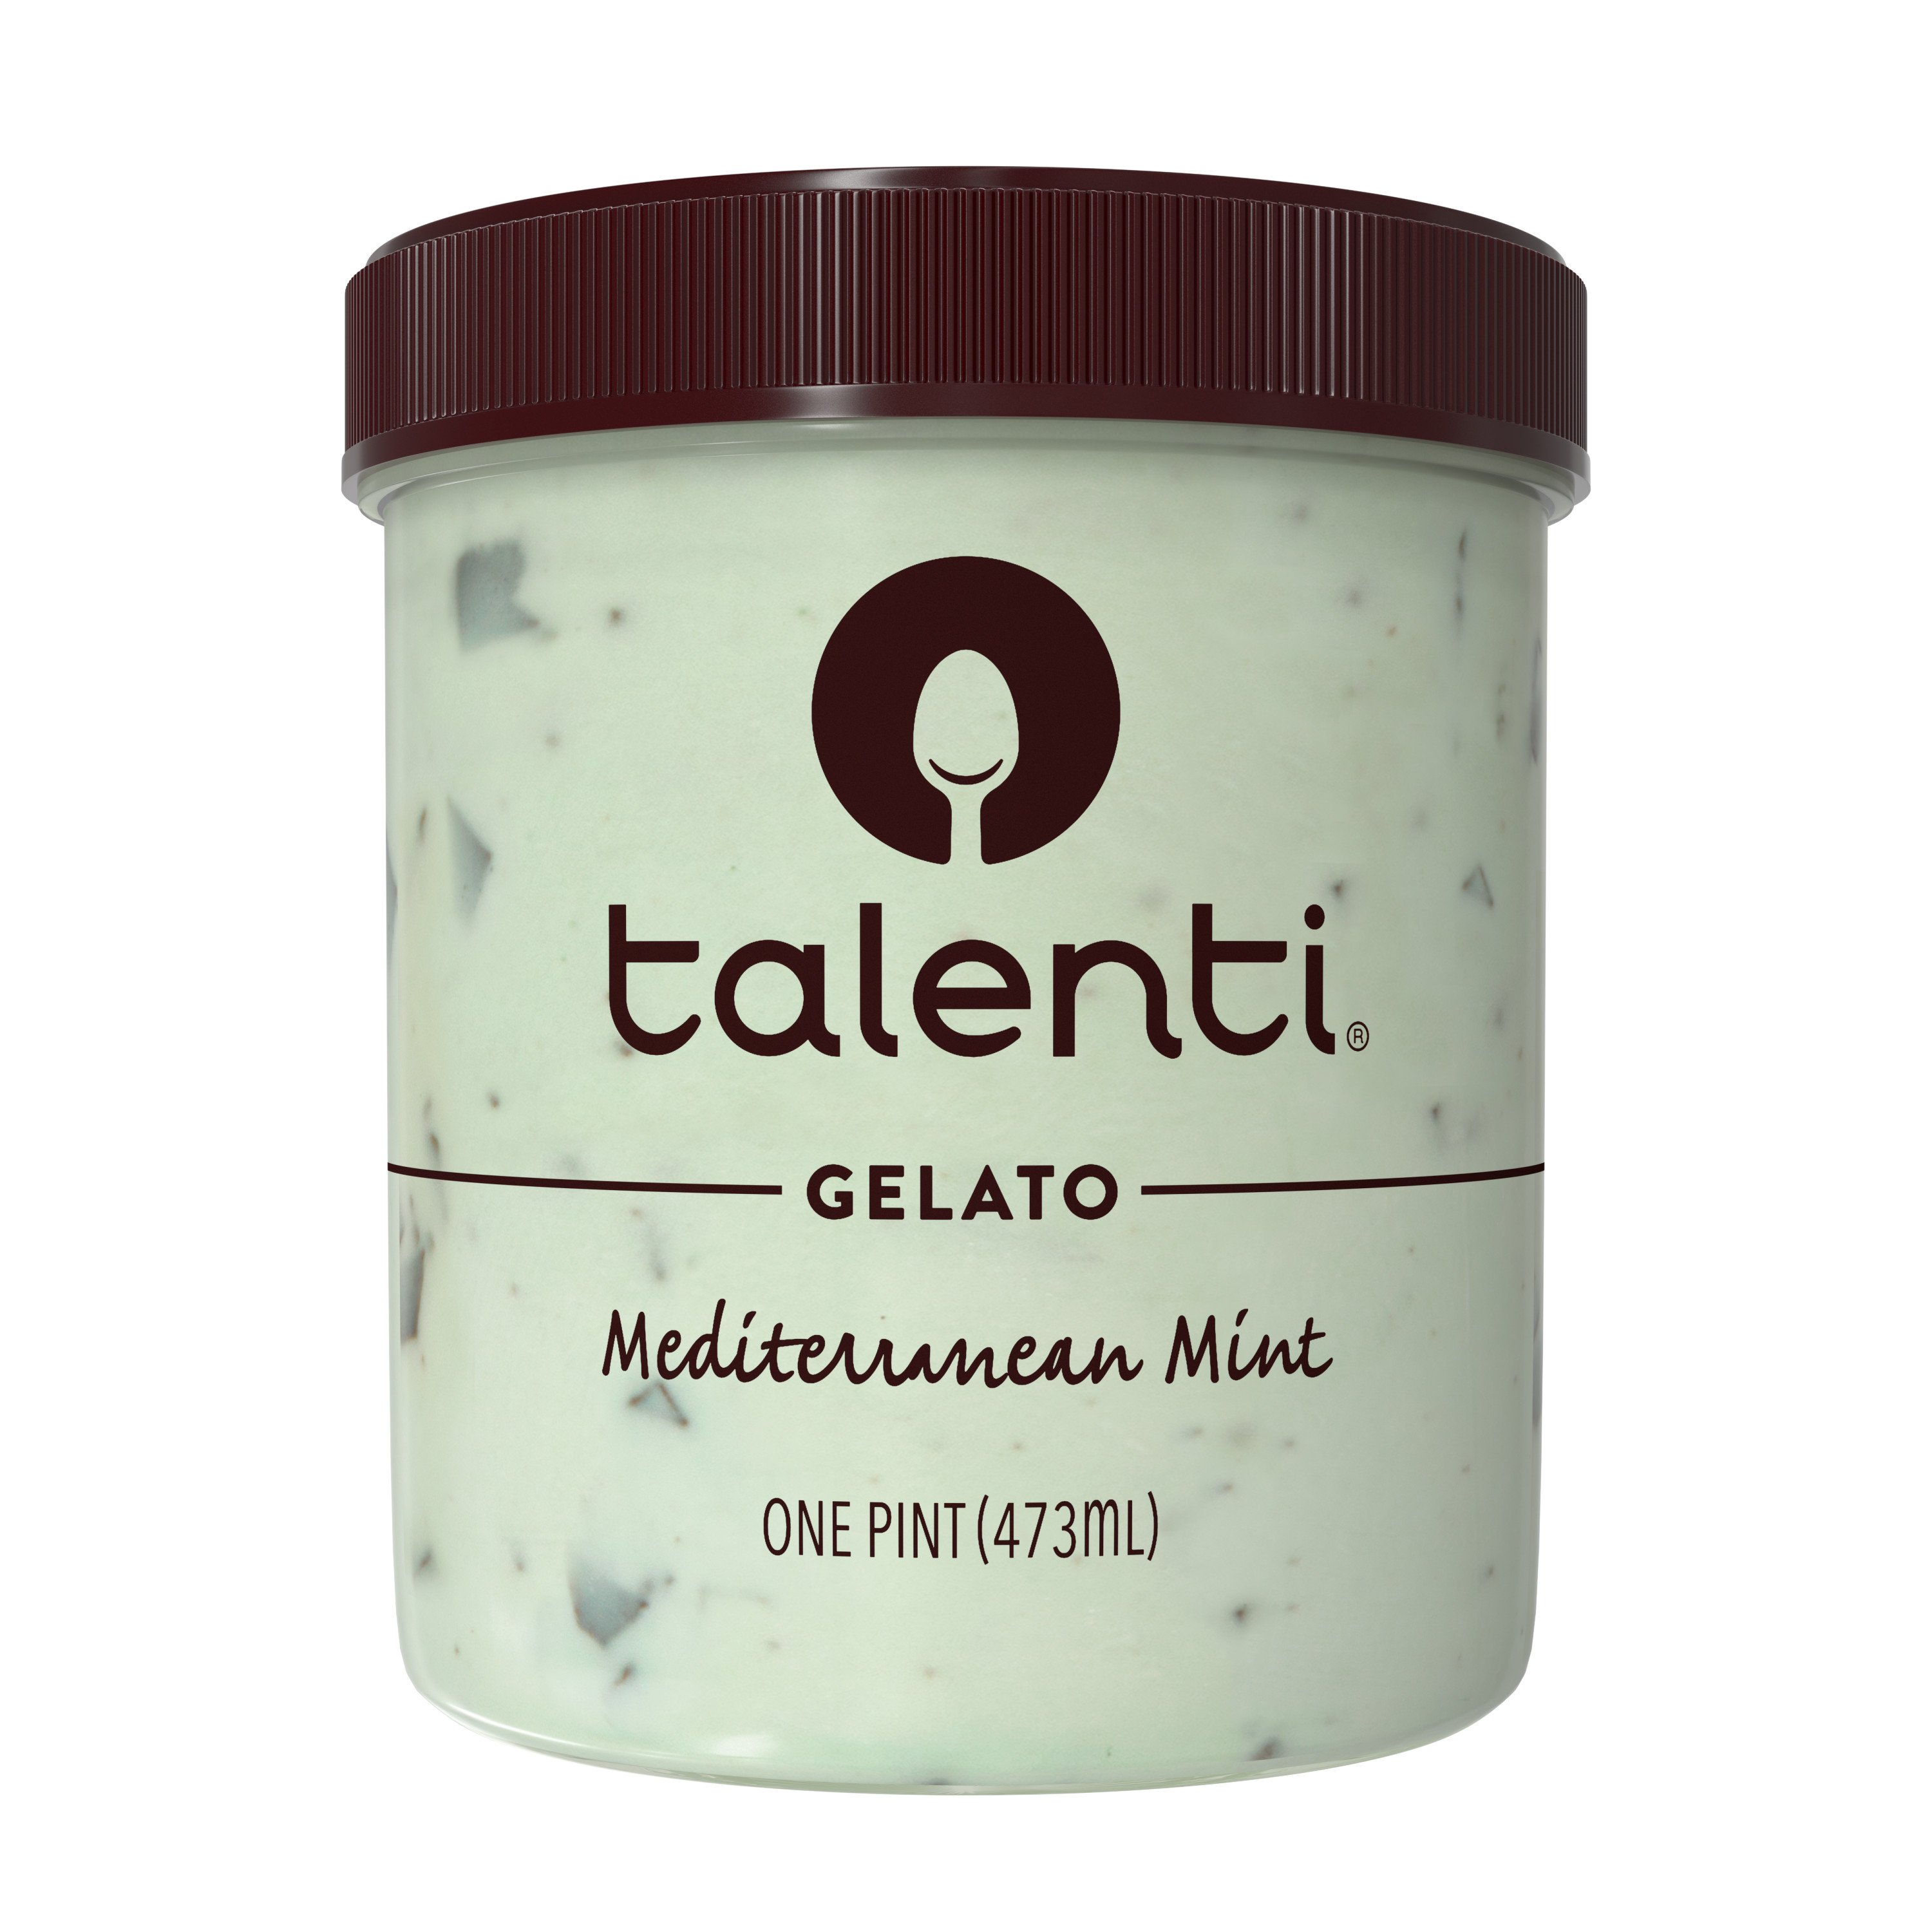 Talenti® Mediterranean Mint Gelato Ice Cream, 1 each at Whole